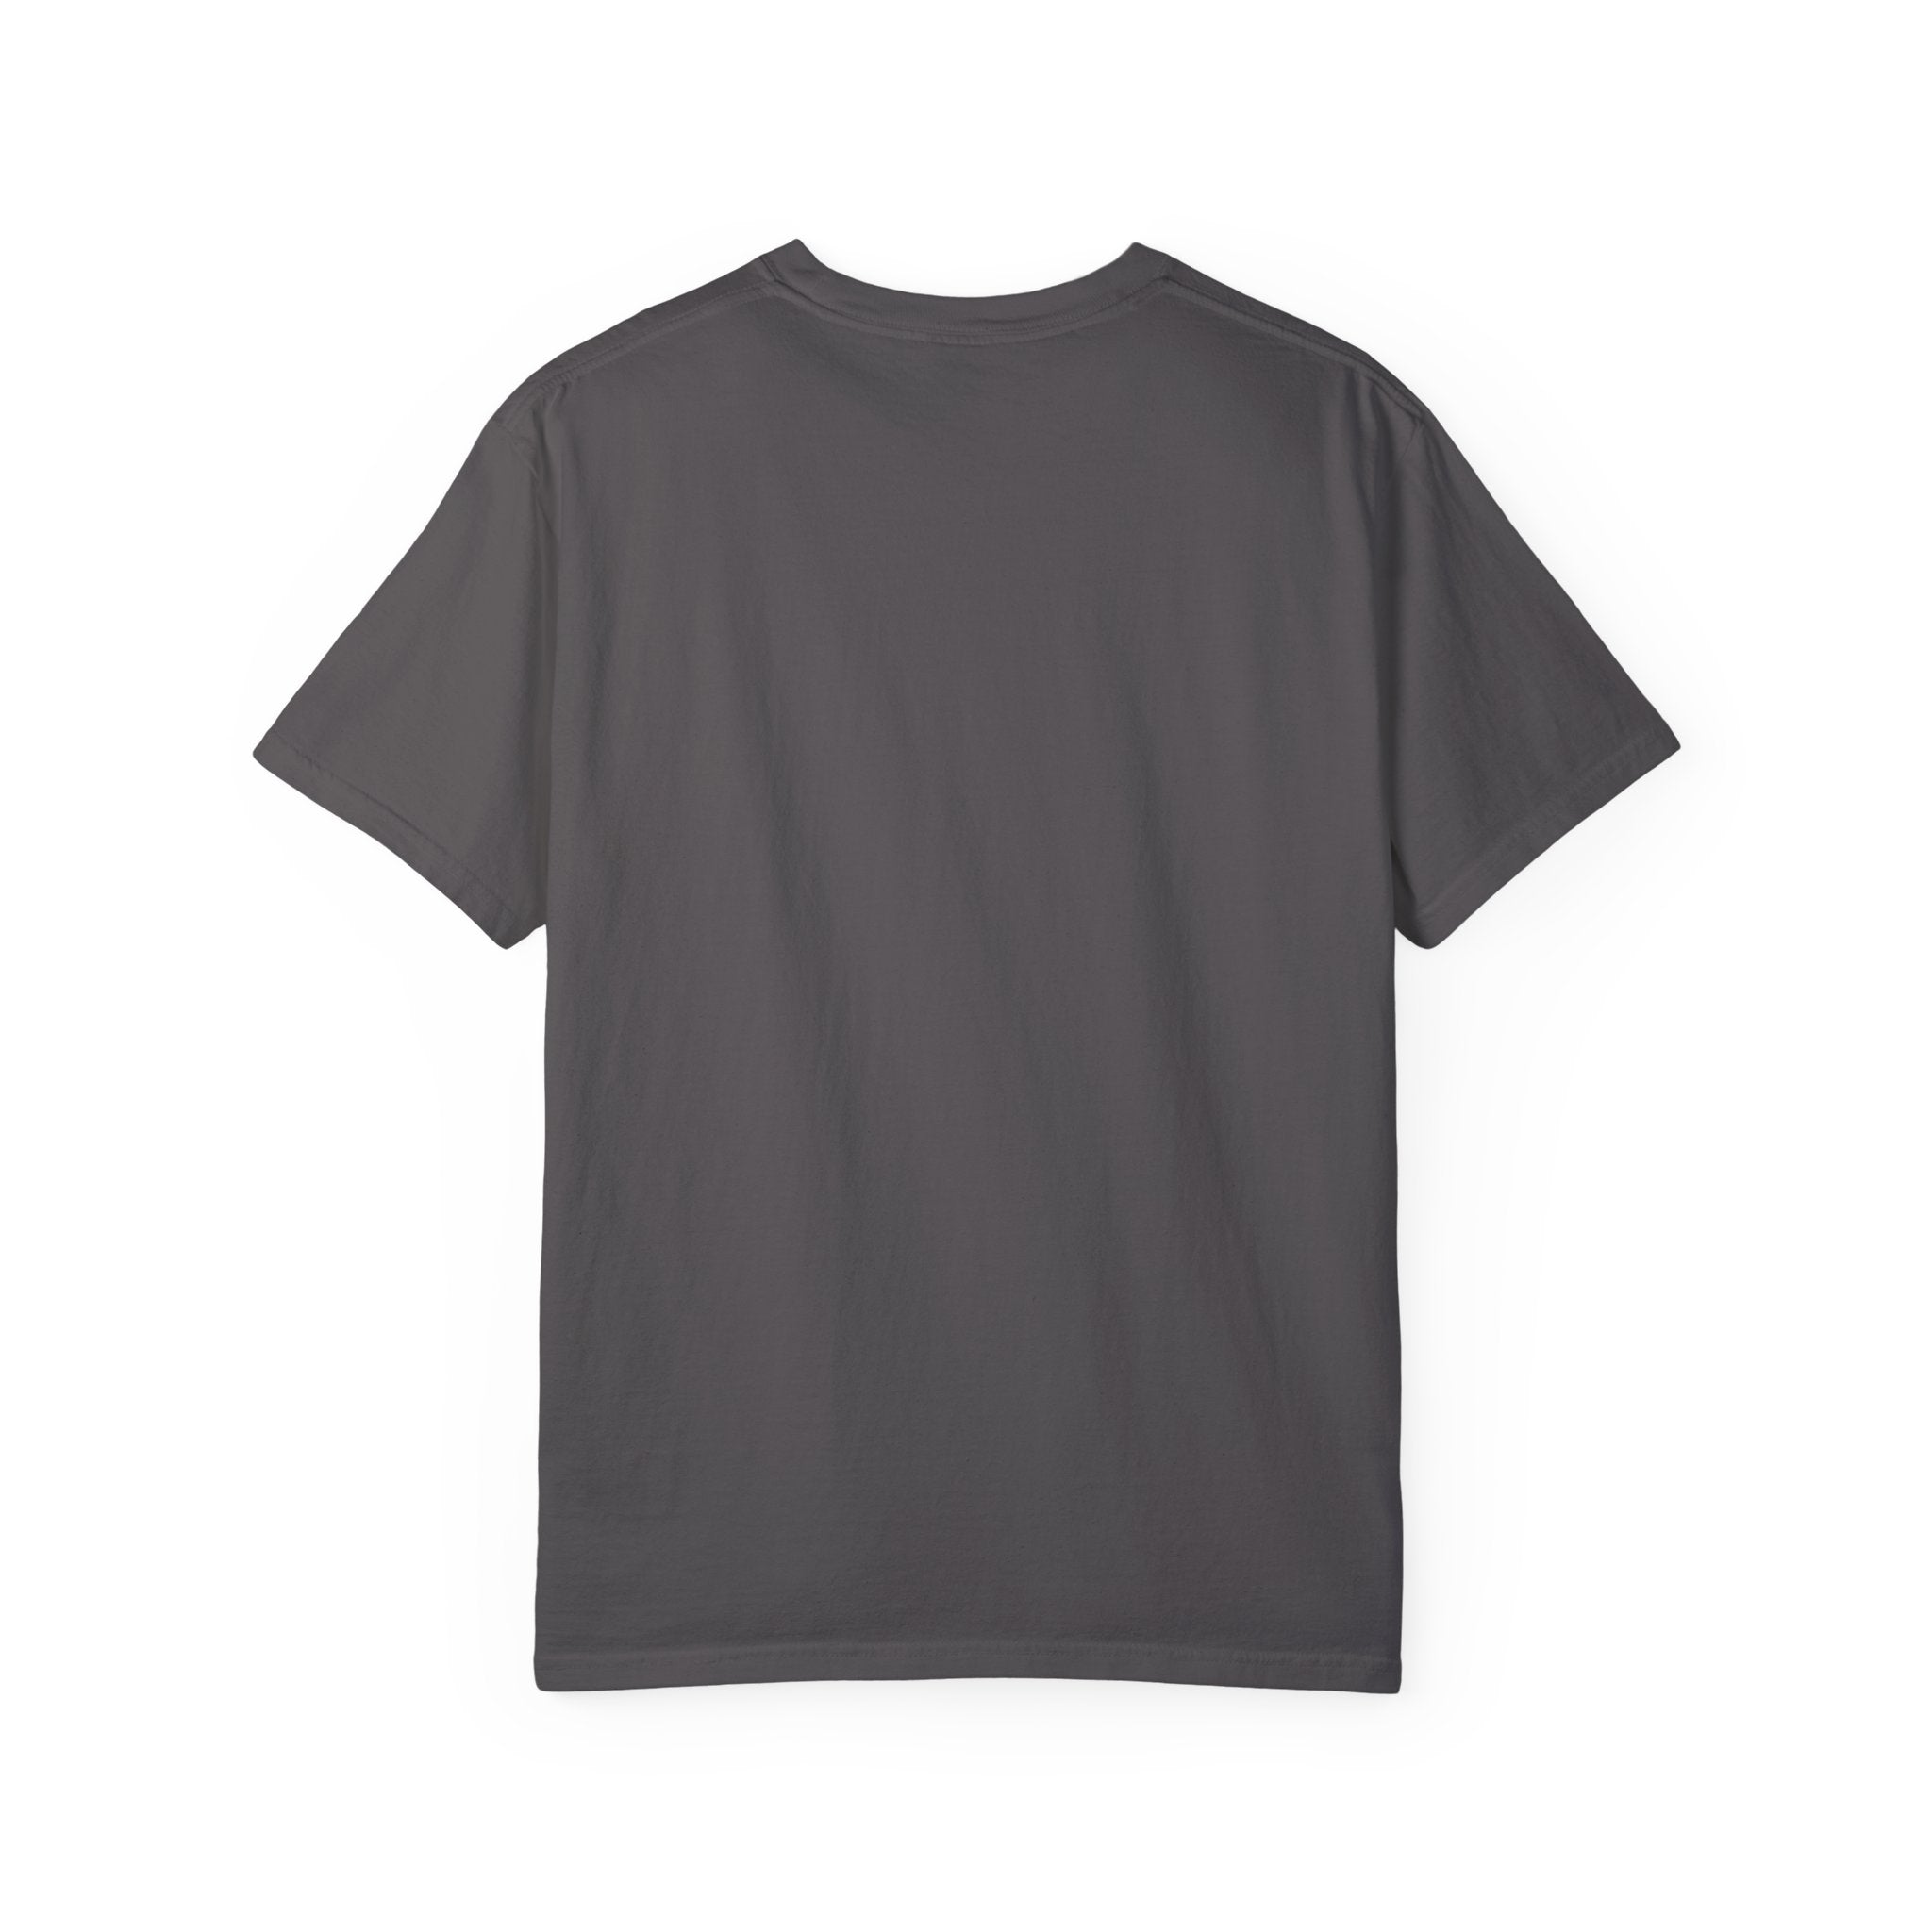 Business Proposal Unisex Garment-Dyed T-shirt